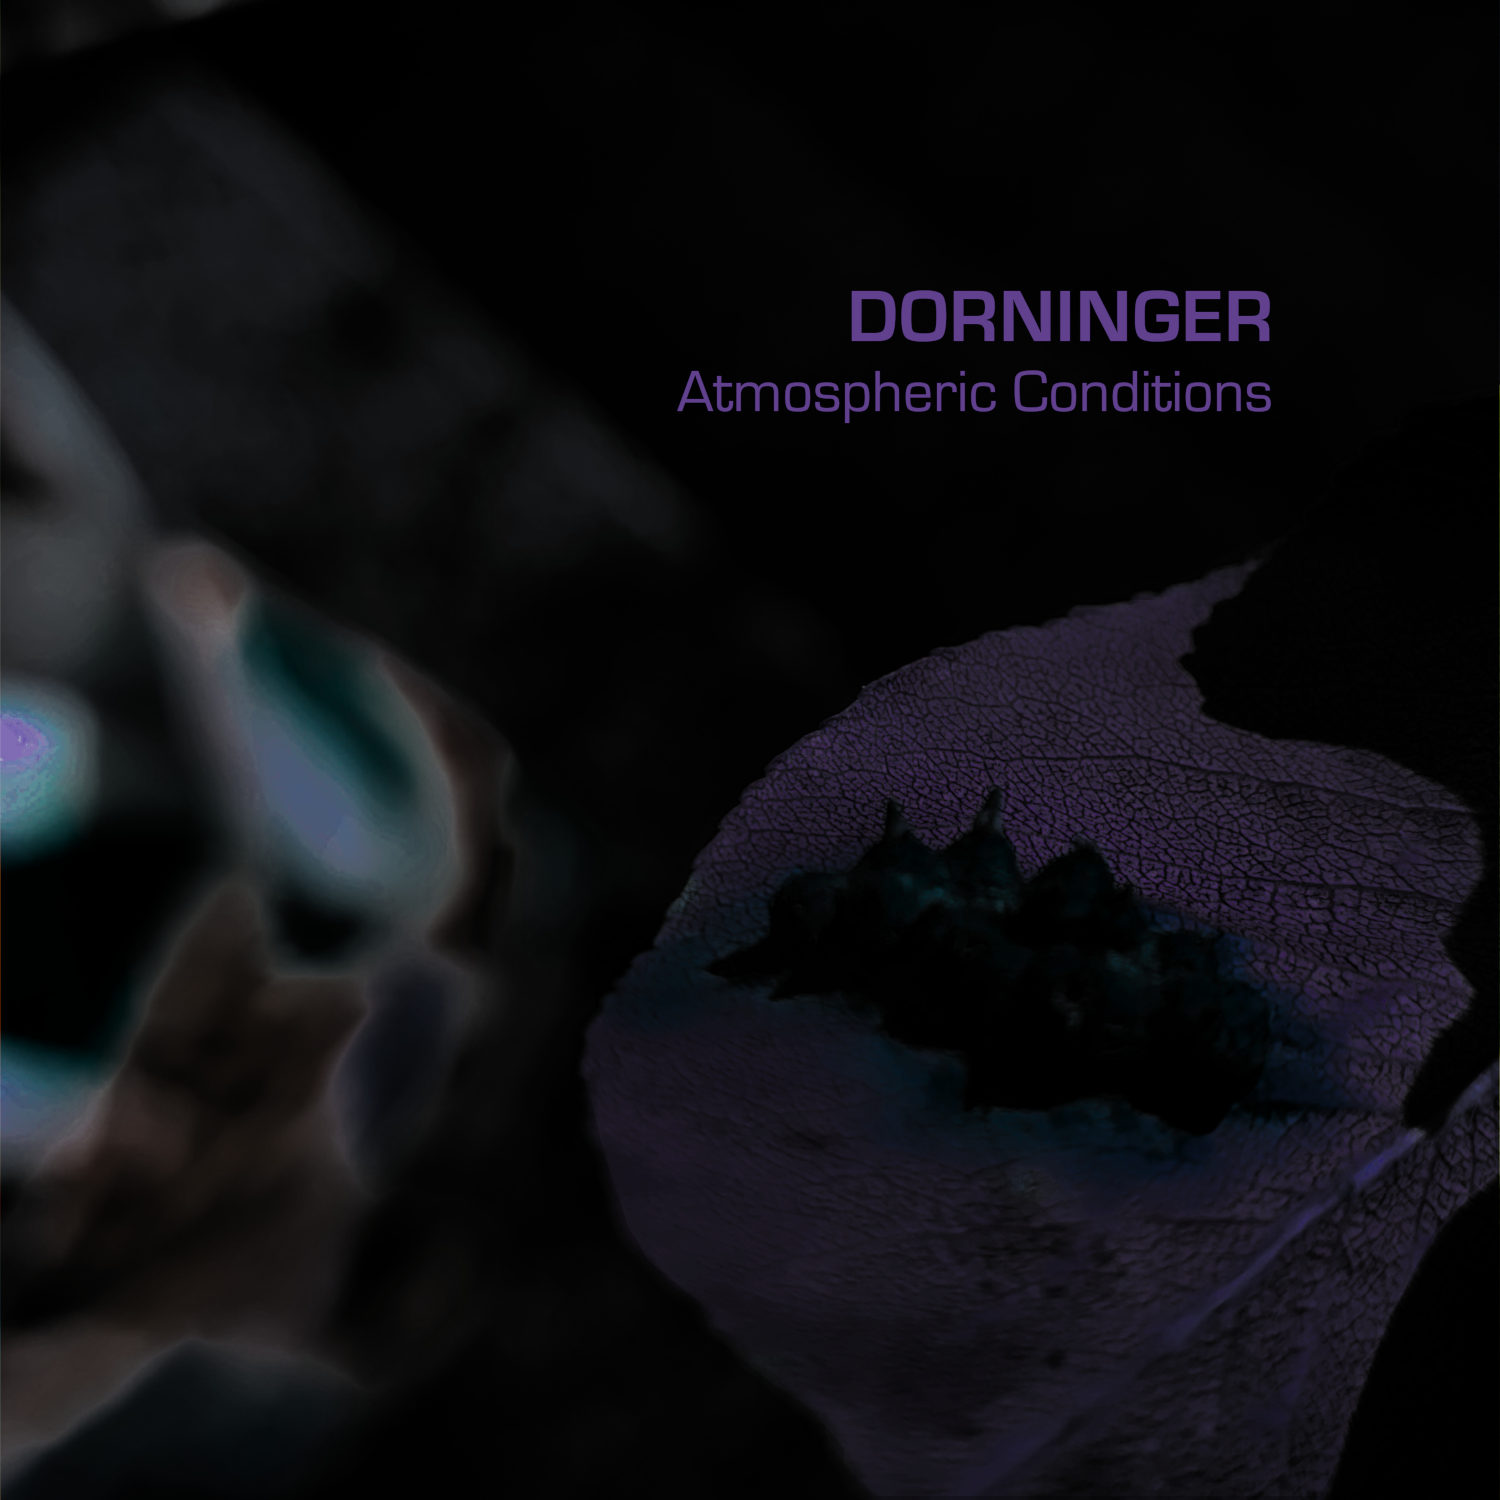 Dorninger "Atmospheric Conditions" CDR/Digital/K7